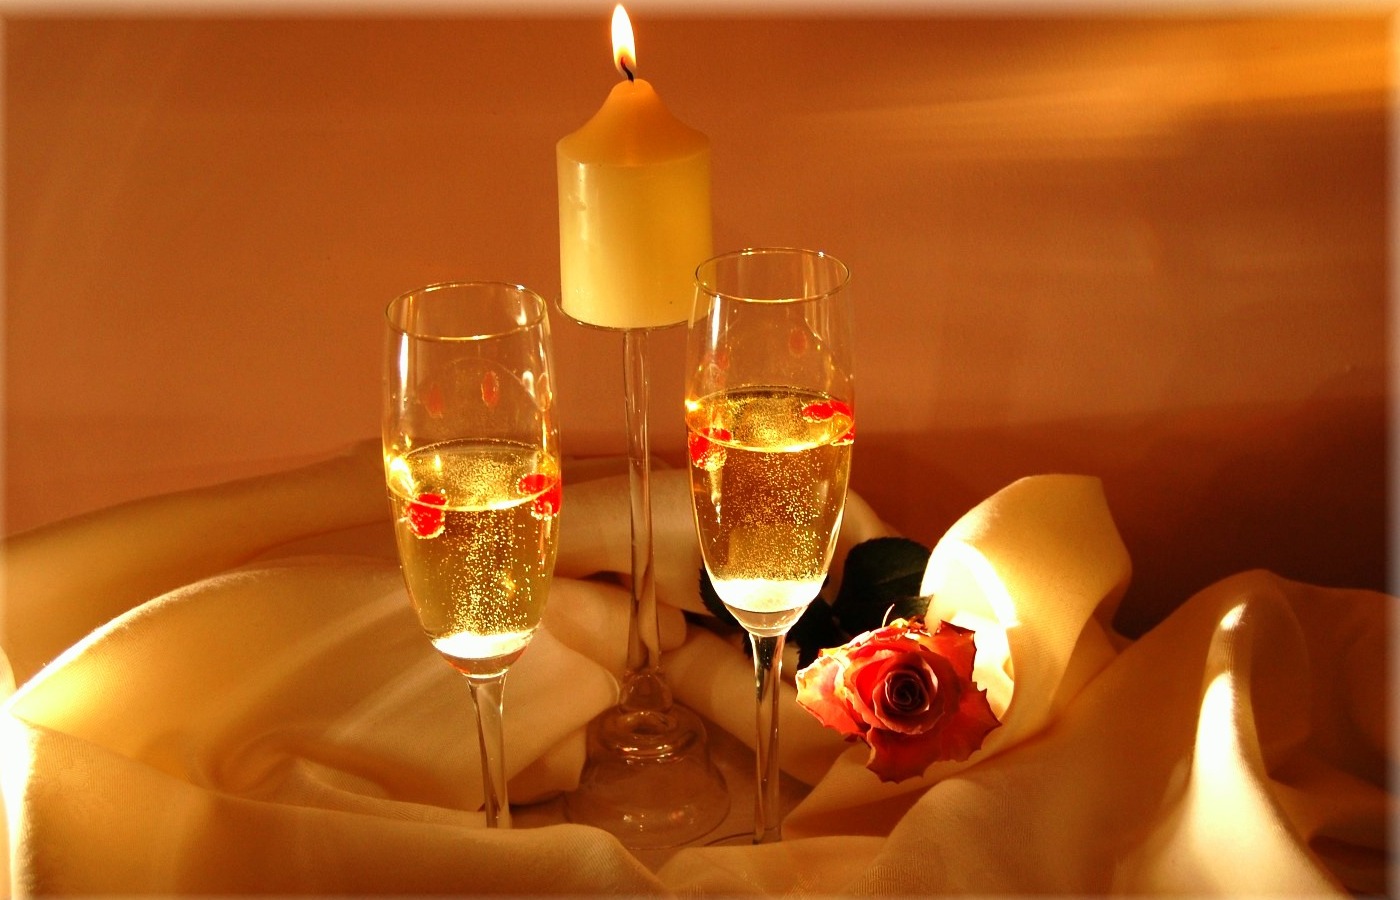 romantic_deco_wine_candle_decoration_hd-wallpaper-1457684